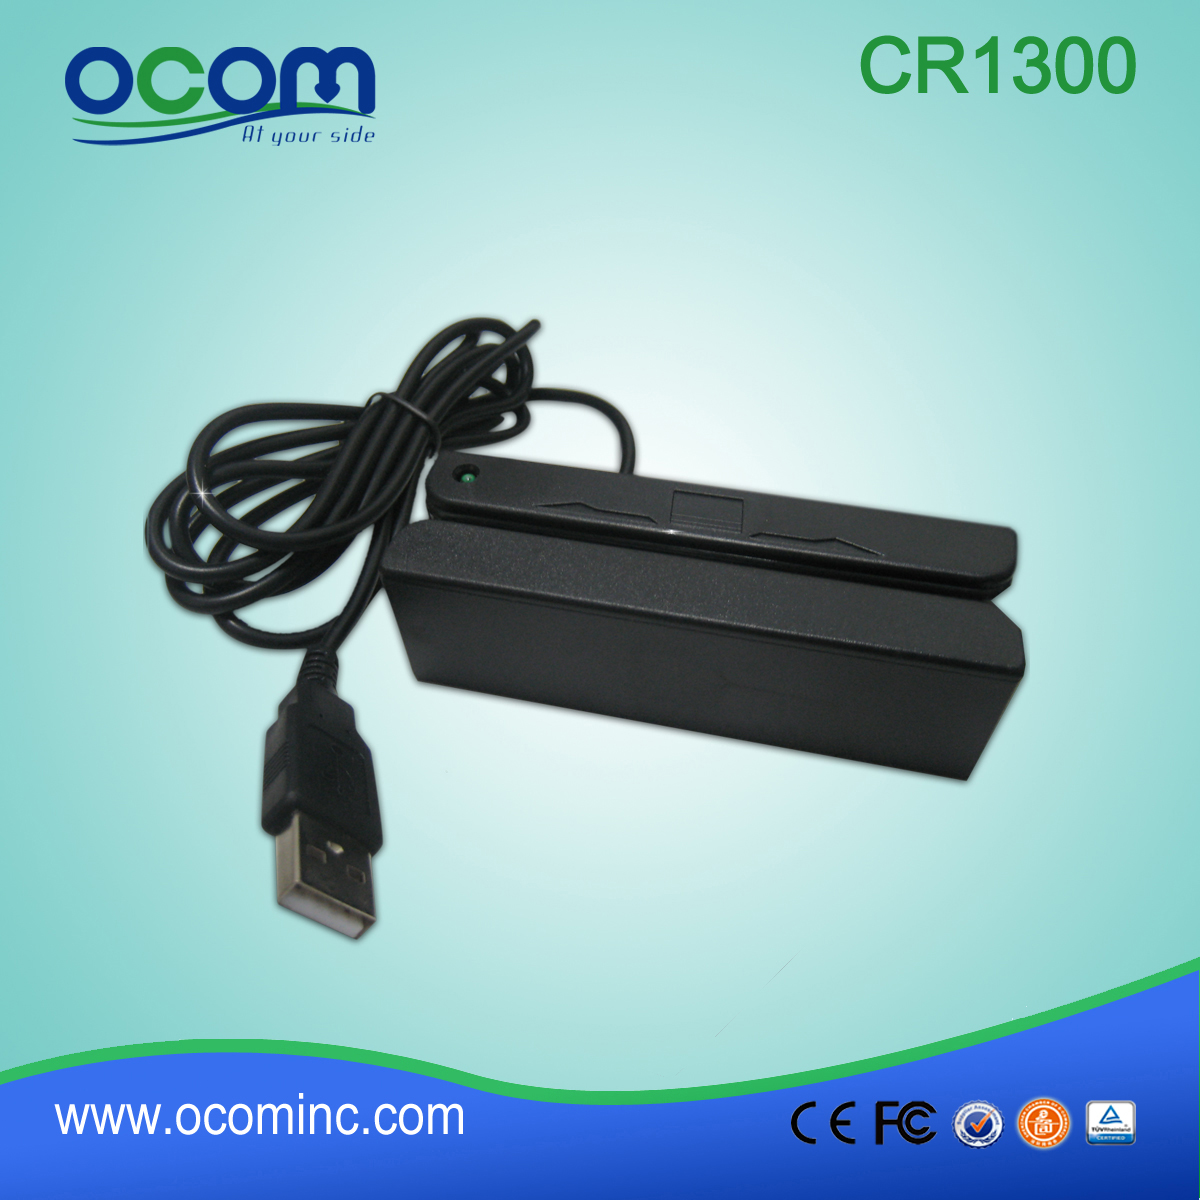 CR1300 OCOM αναγνώστη μαγνητικών καρτών για GPS tracker